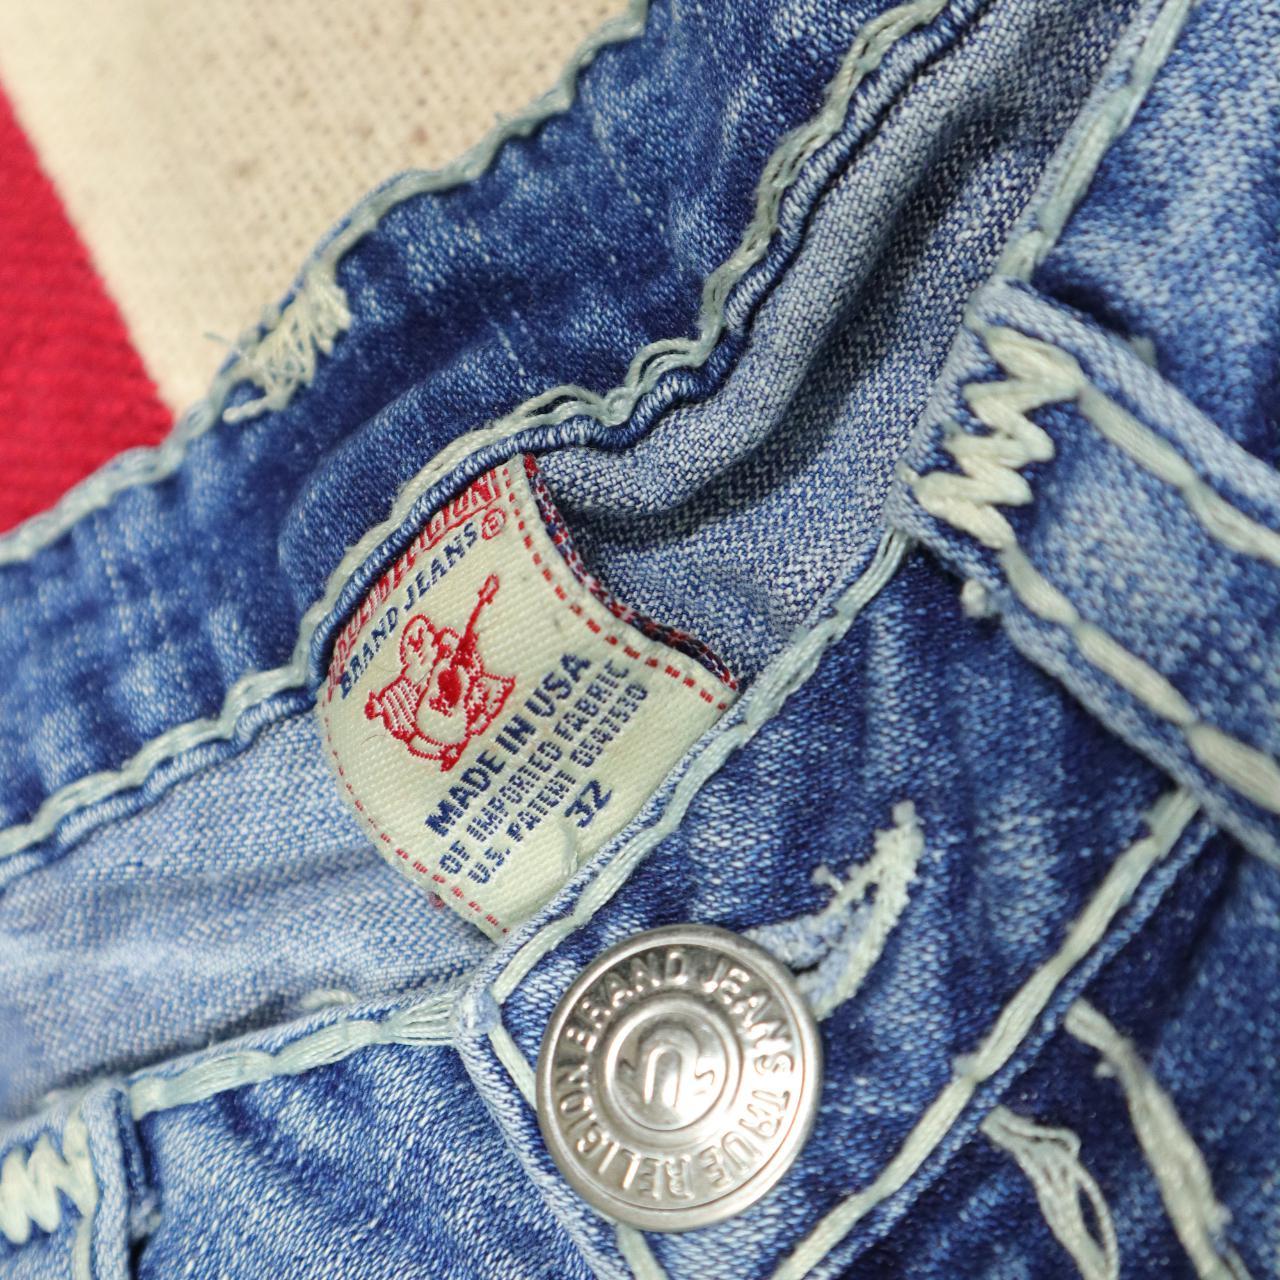 Product Image 3 - True Religion Jeans

Size 32x32

Waist: 32"
Length: